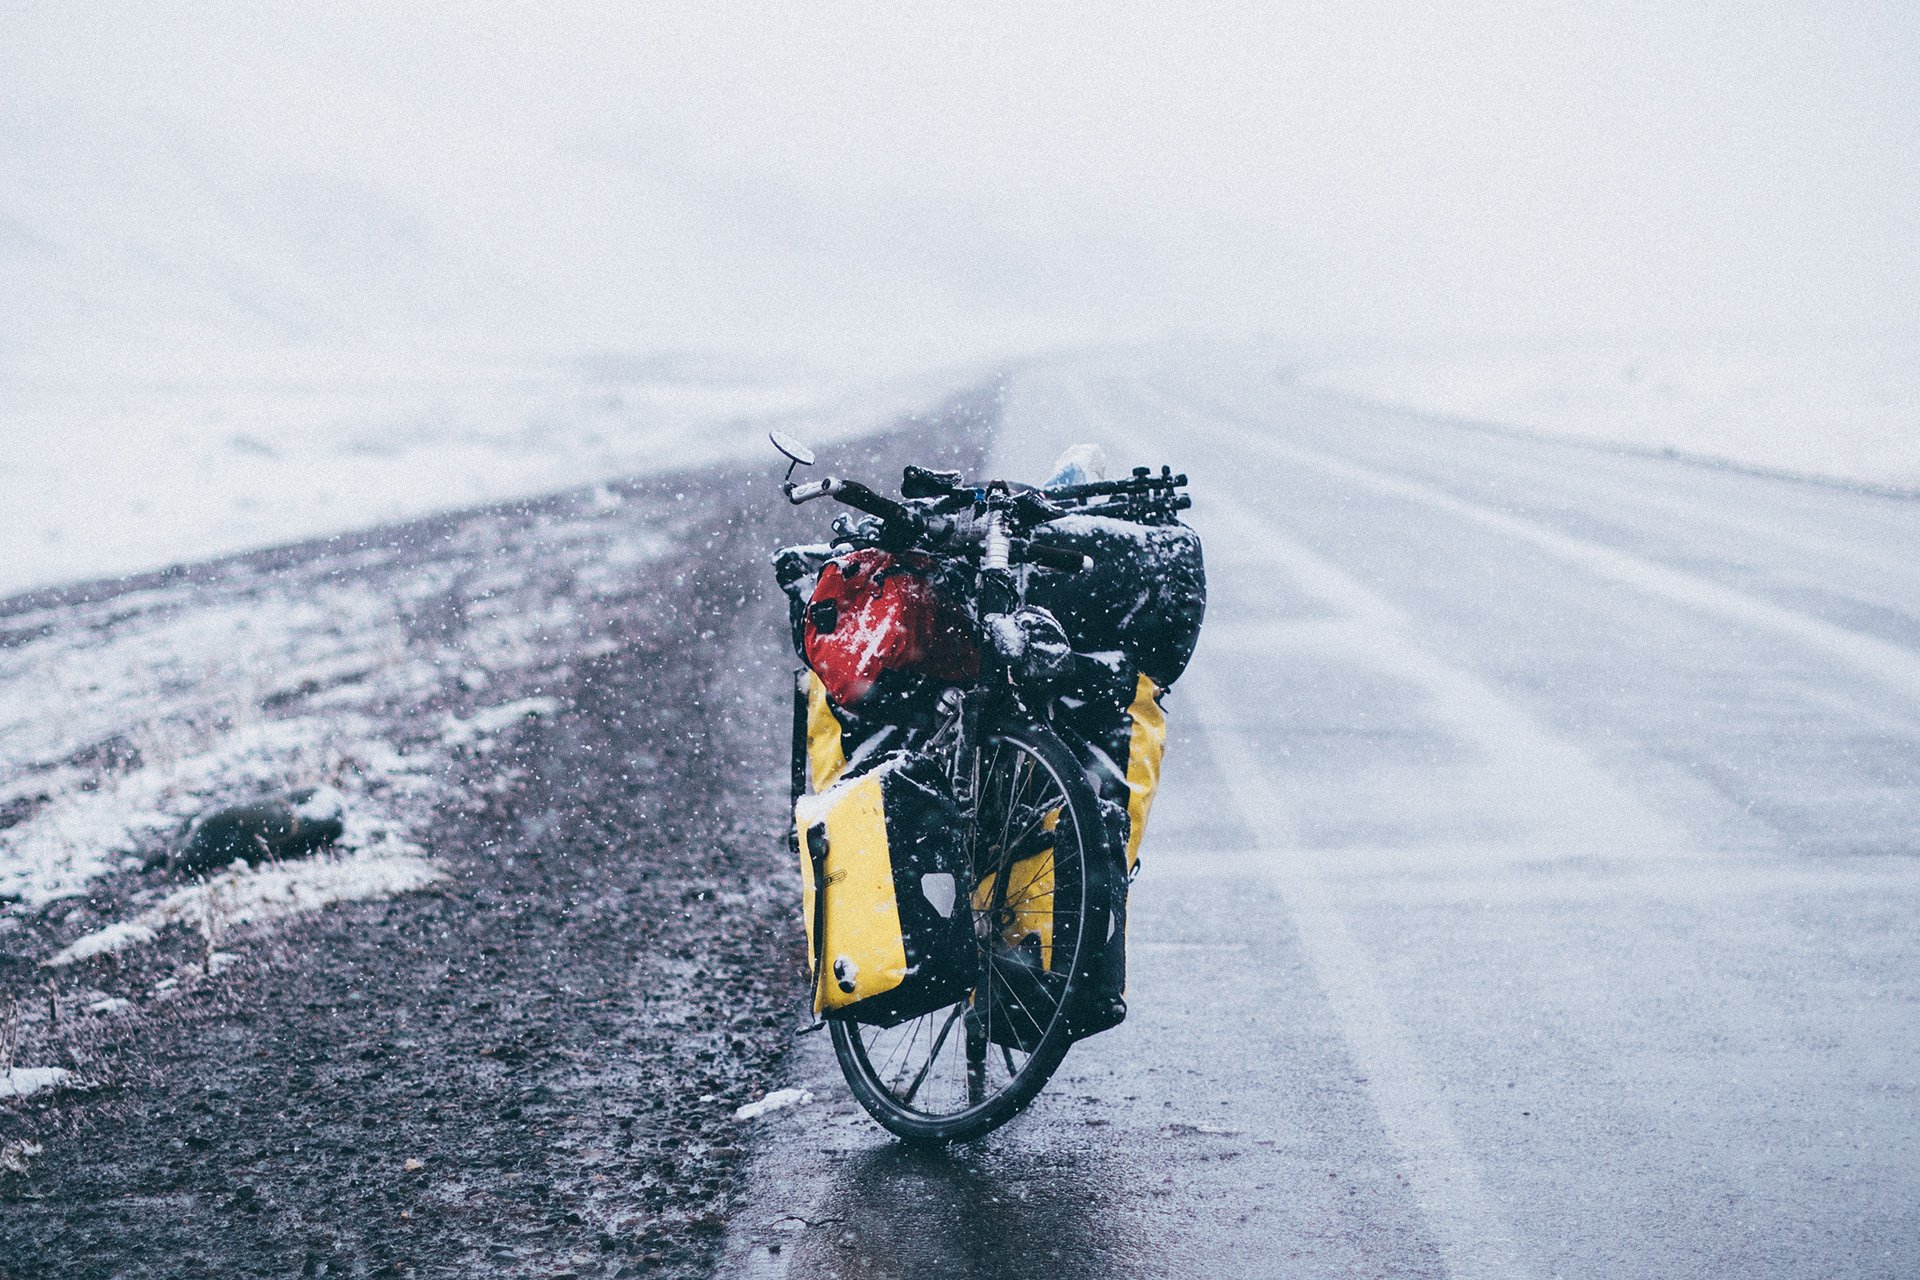 Martijn Doolaard Photographs Extreme Cycling in Kyrgyzstan's Winter